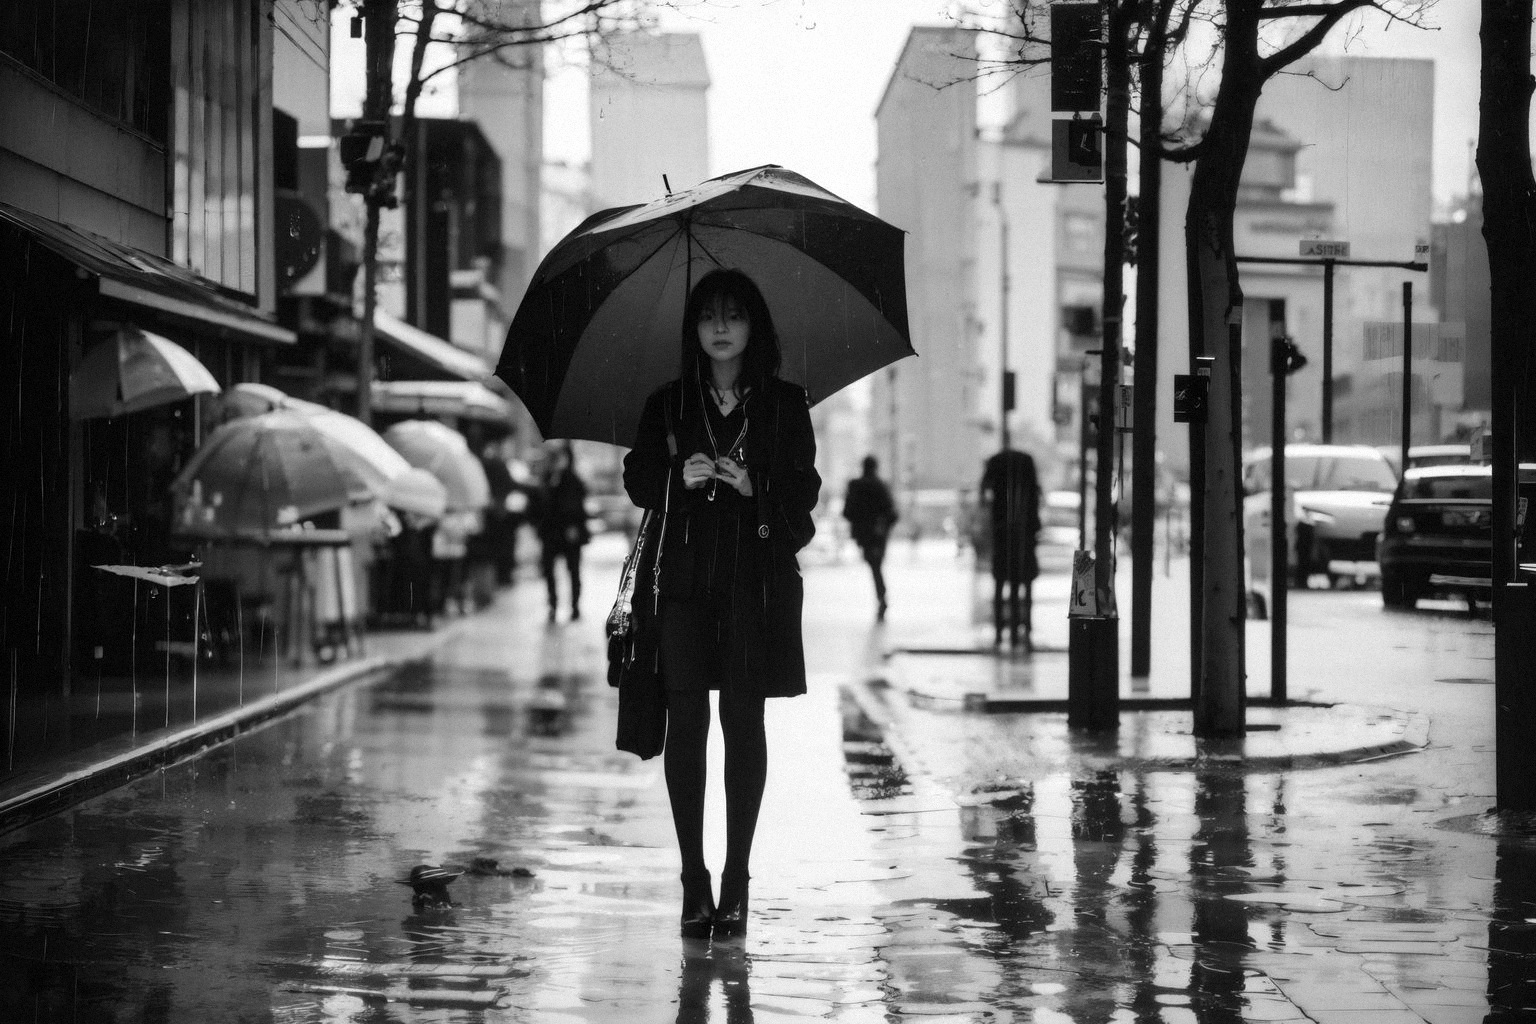 The Umbrella LoRA: Rain Umbrella, Parasol, Wagasa, etc image by dkorbat